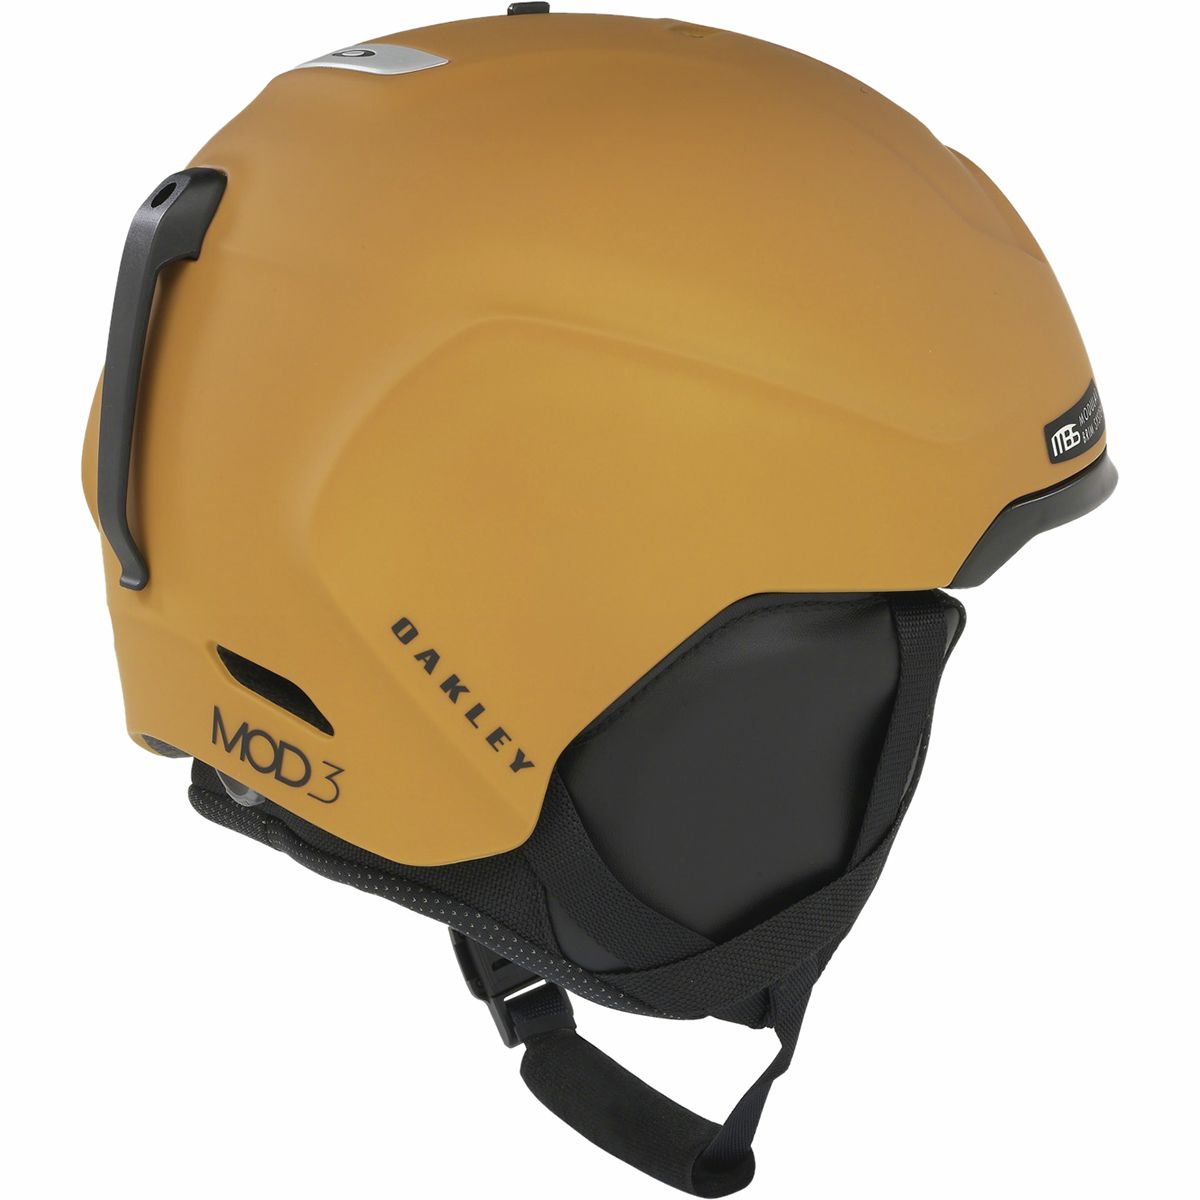 Oakley Mod 3 Helmet - Ski